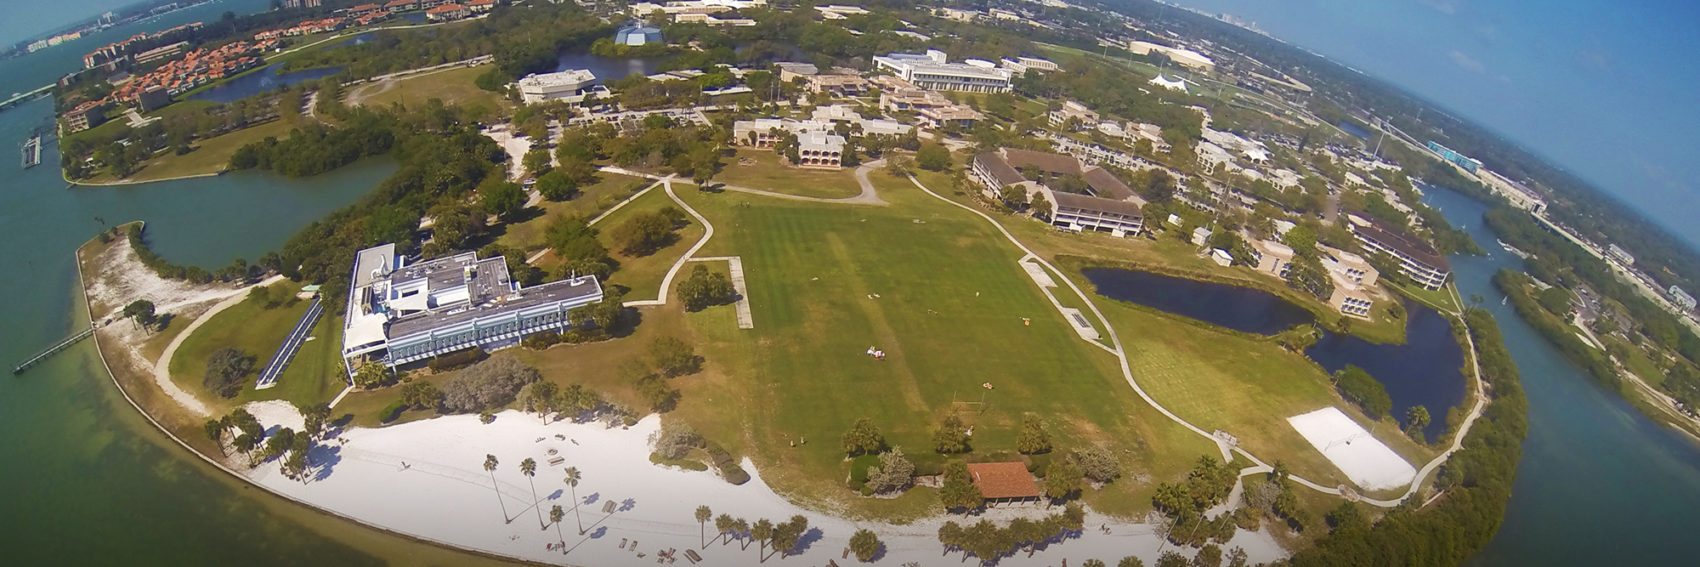 Eckerd College: Liberal Arts College in Florida